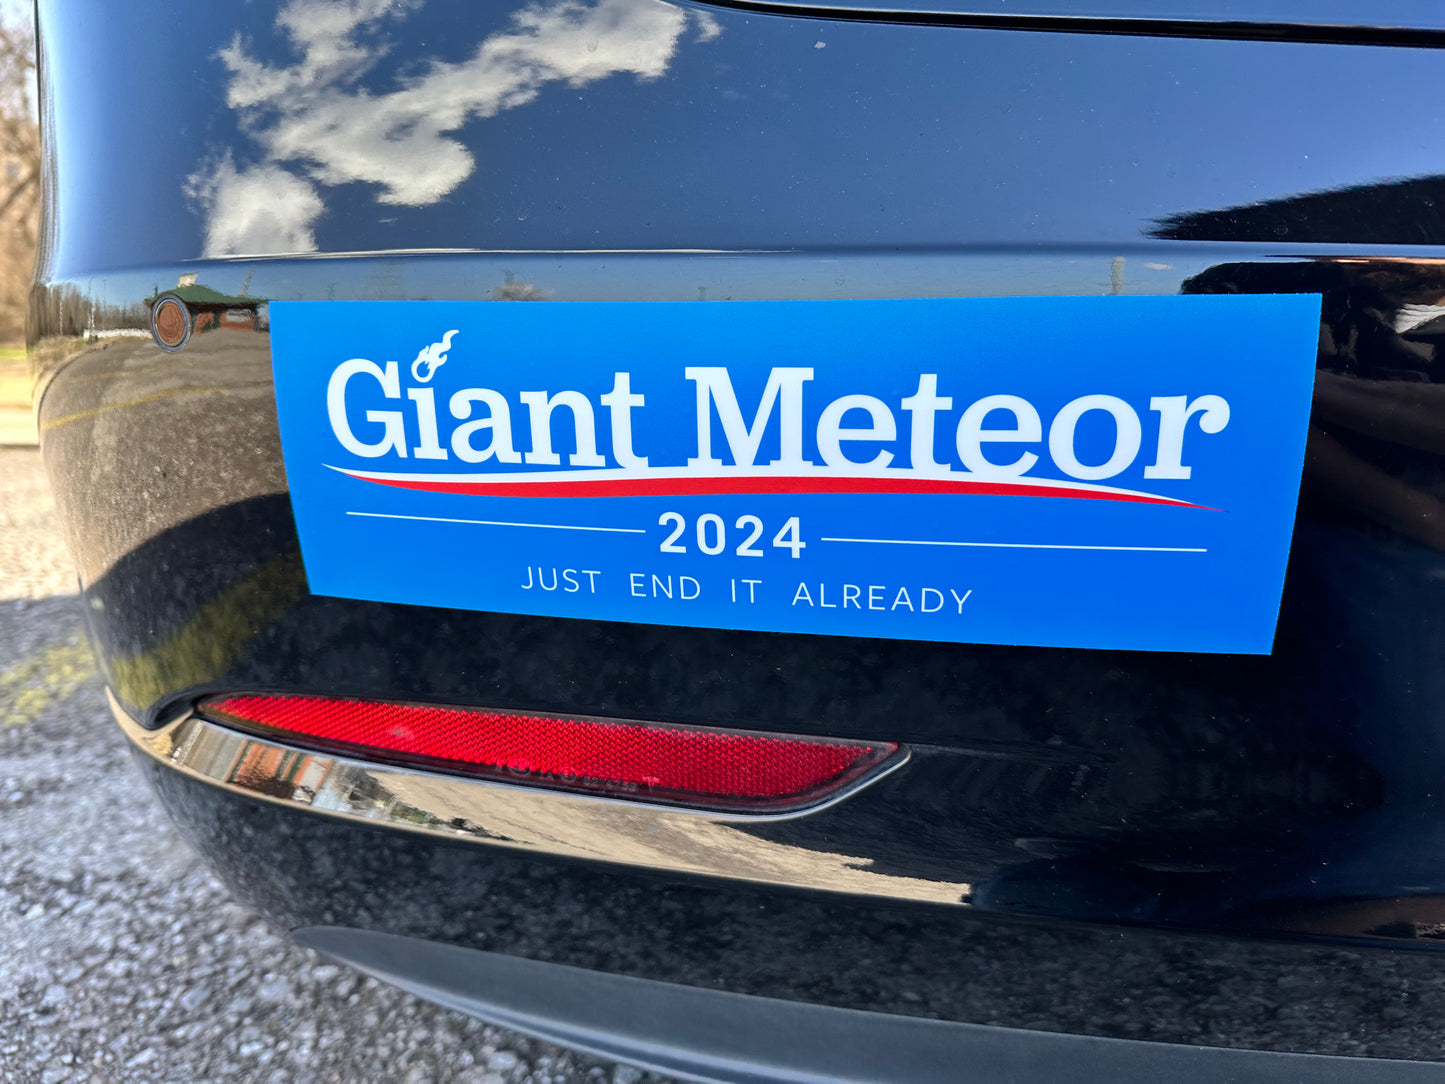 Giant Meteor 2024 Bumper Sticker, Just End It Already!